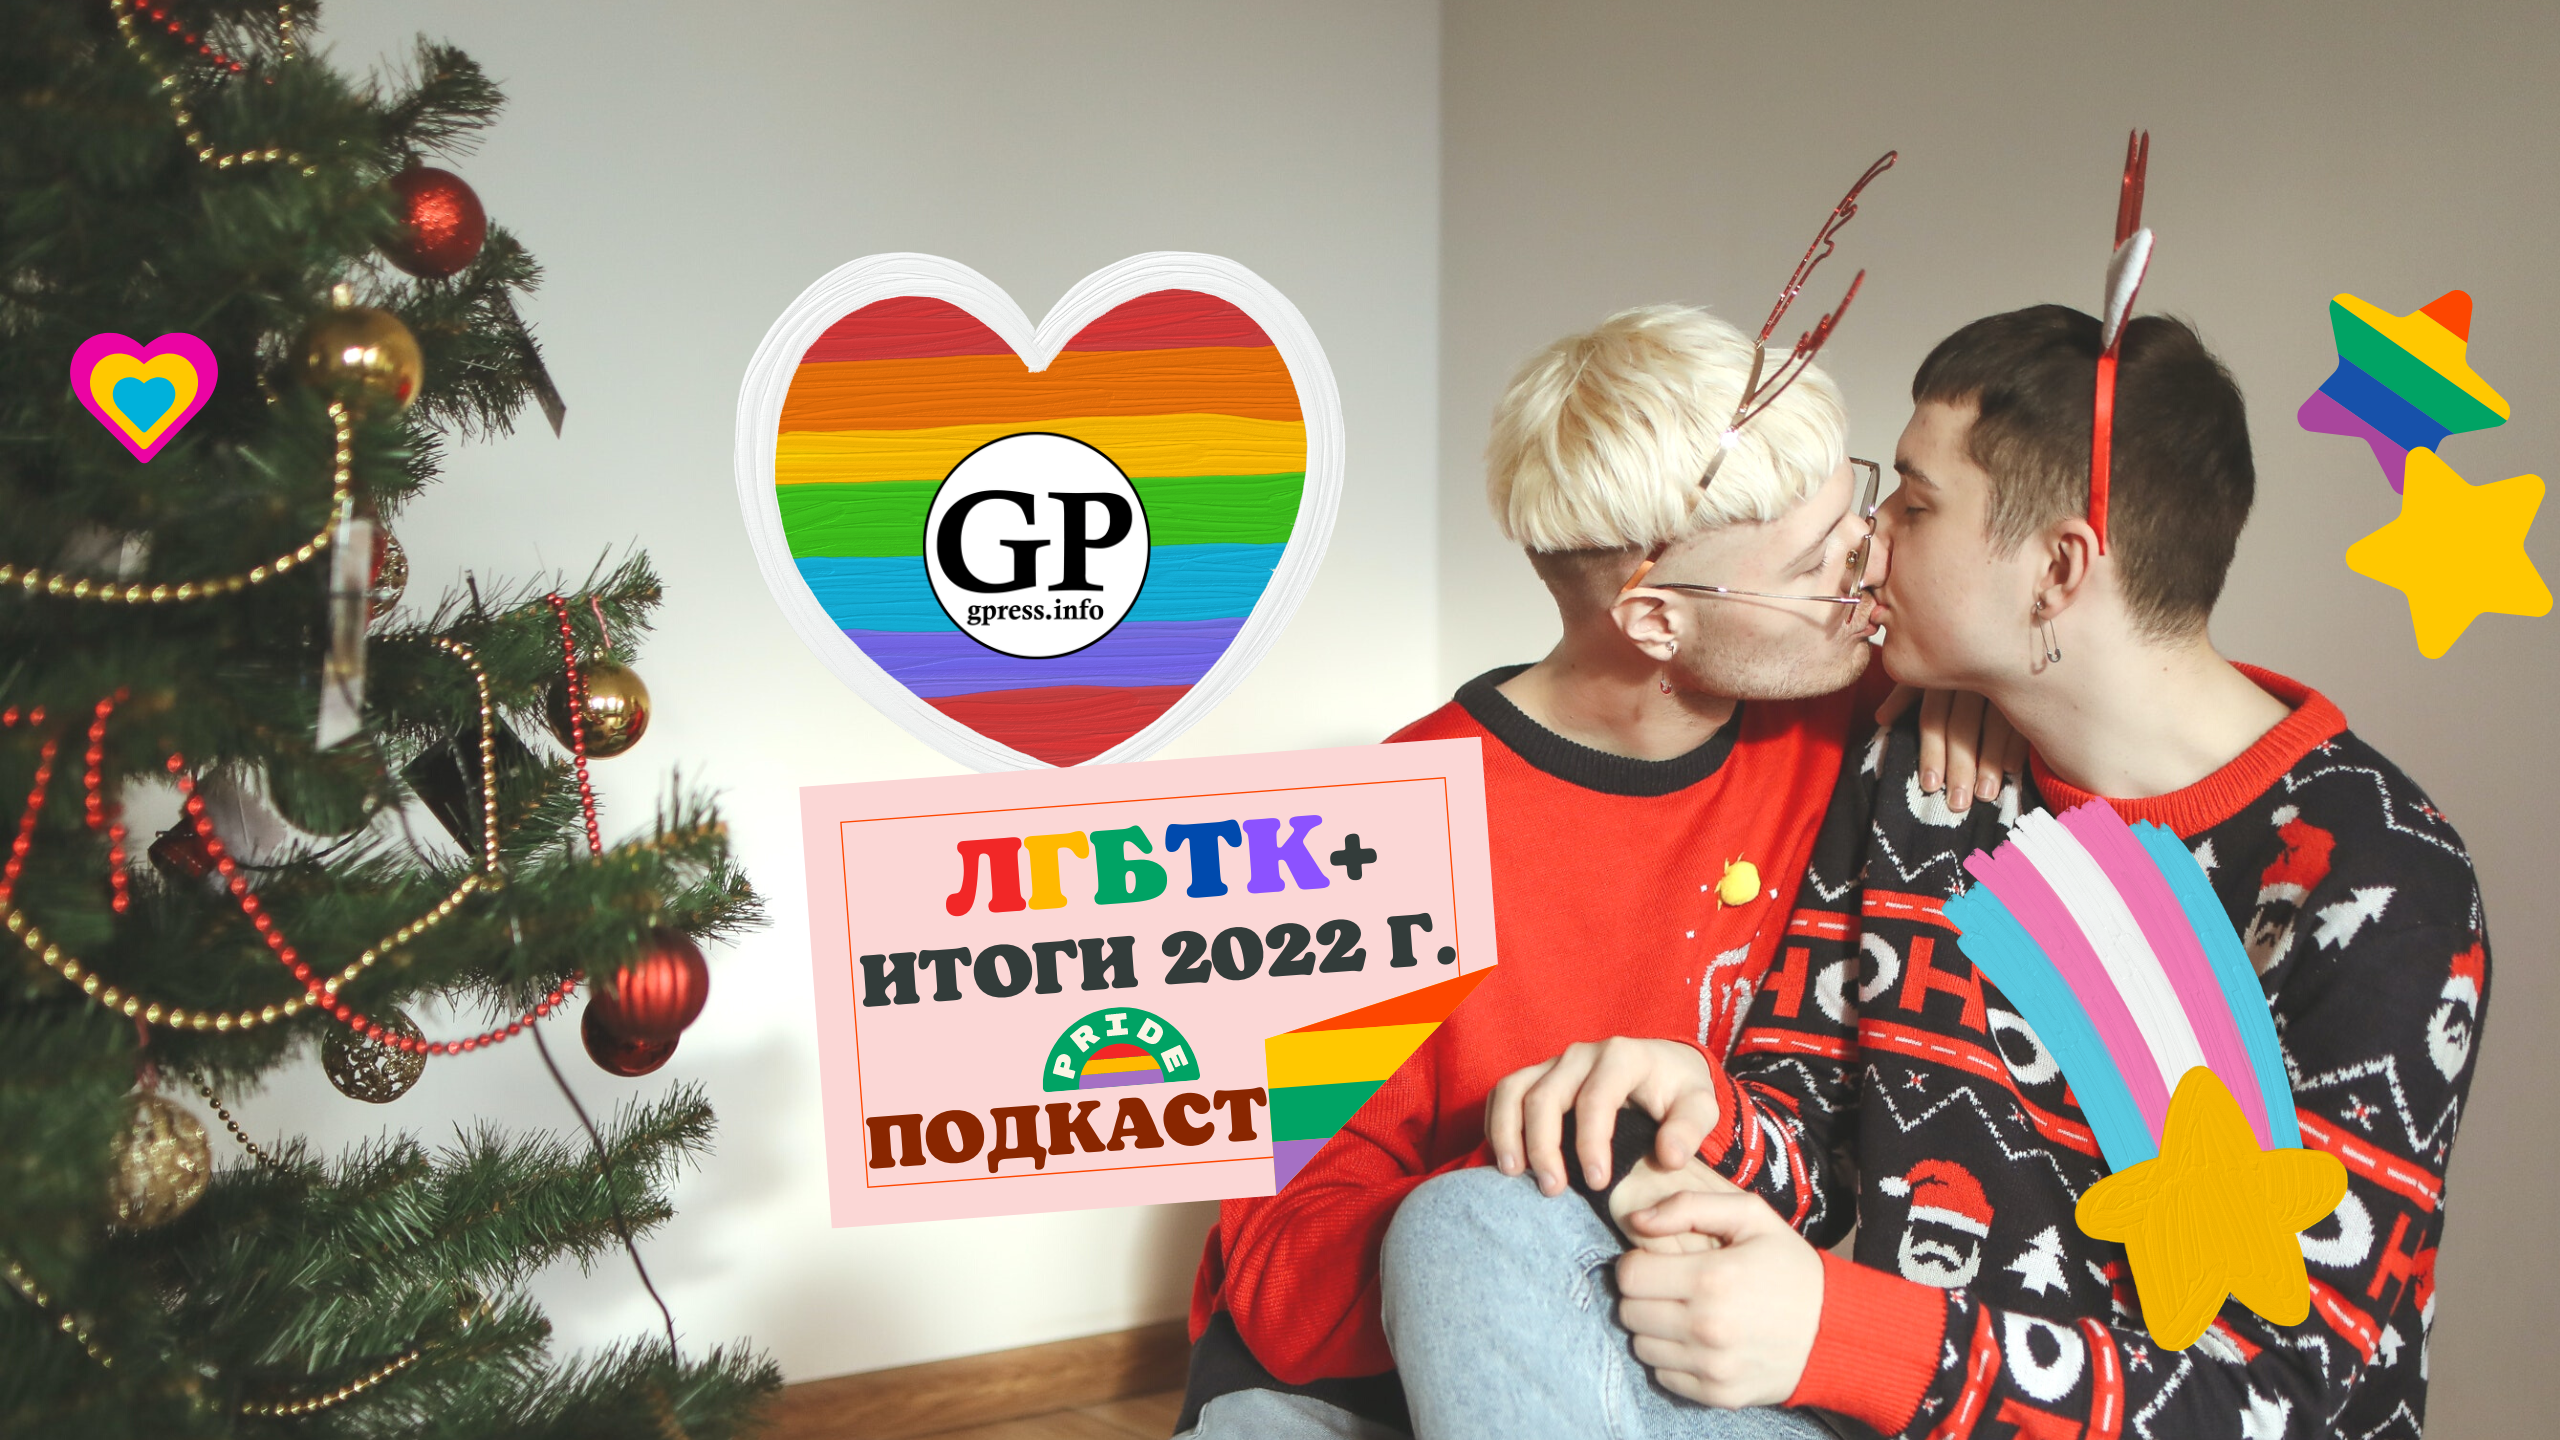 ЛГБТК+ итоги 2022 года. Подкаст